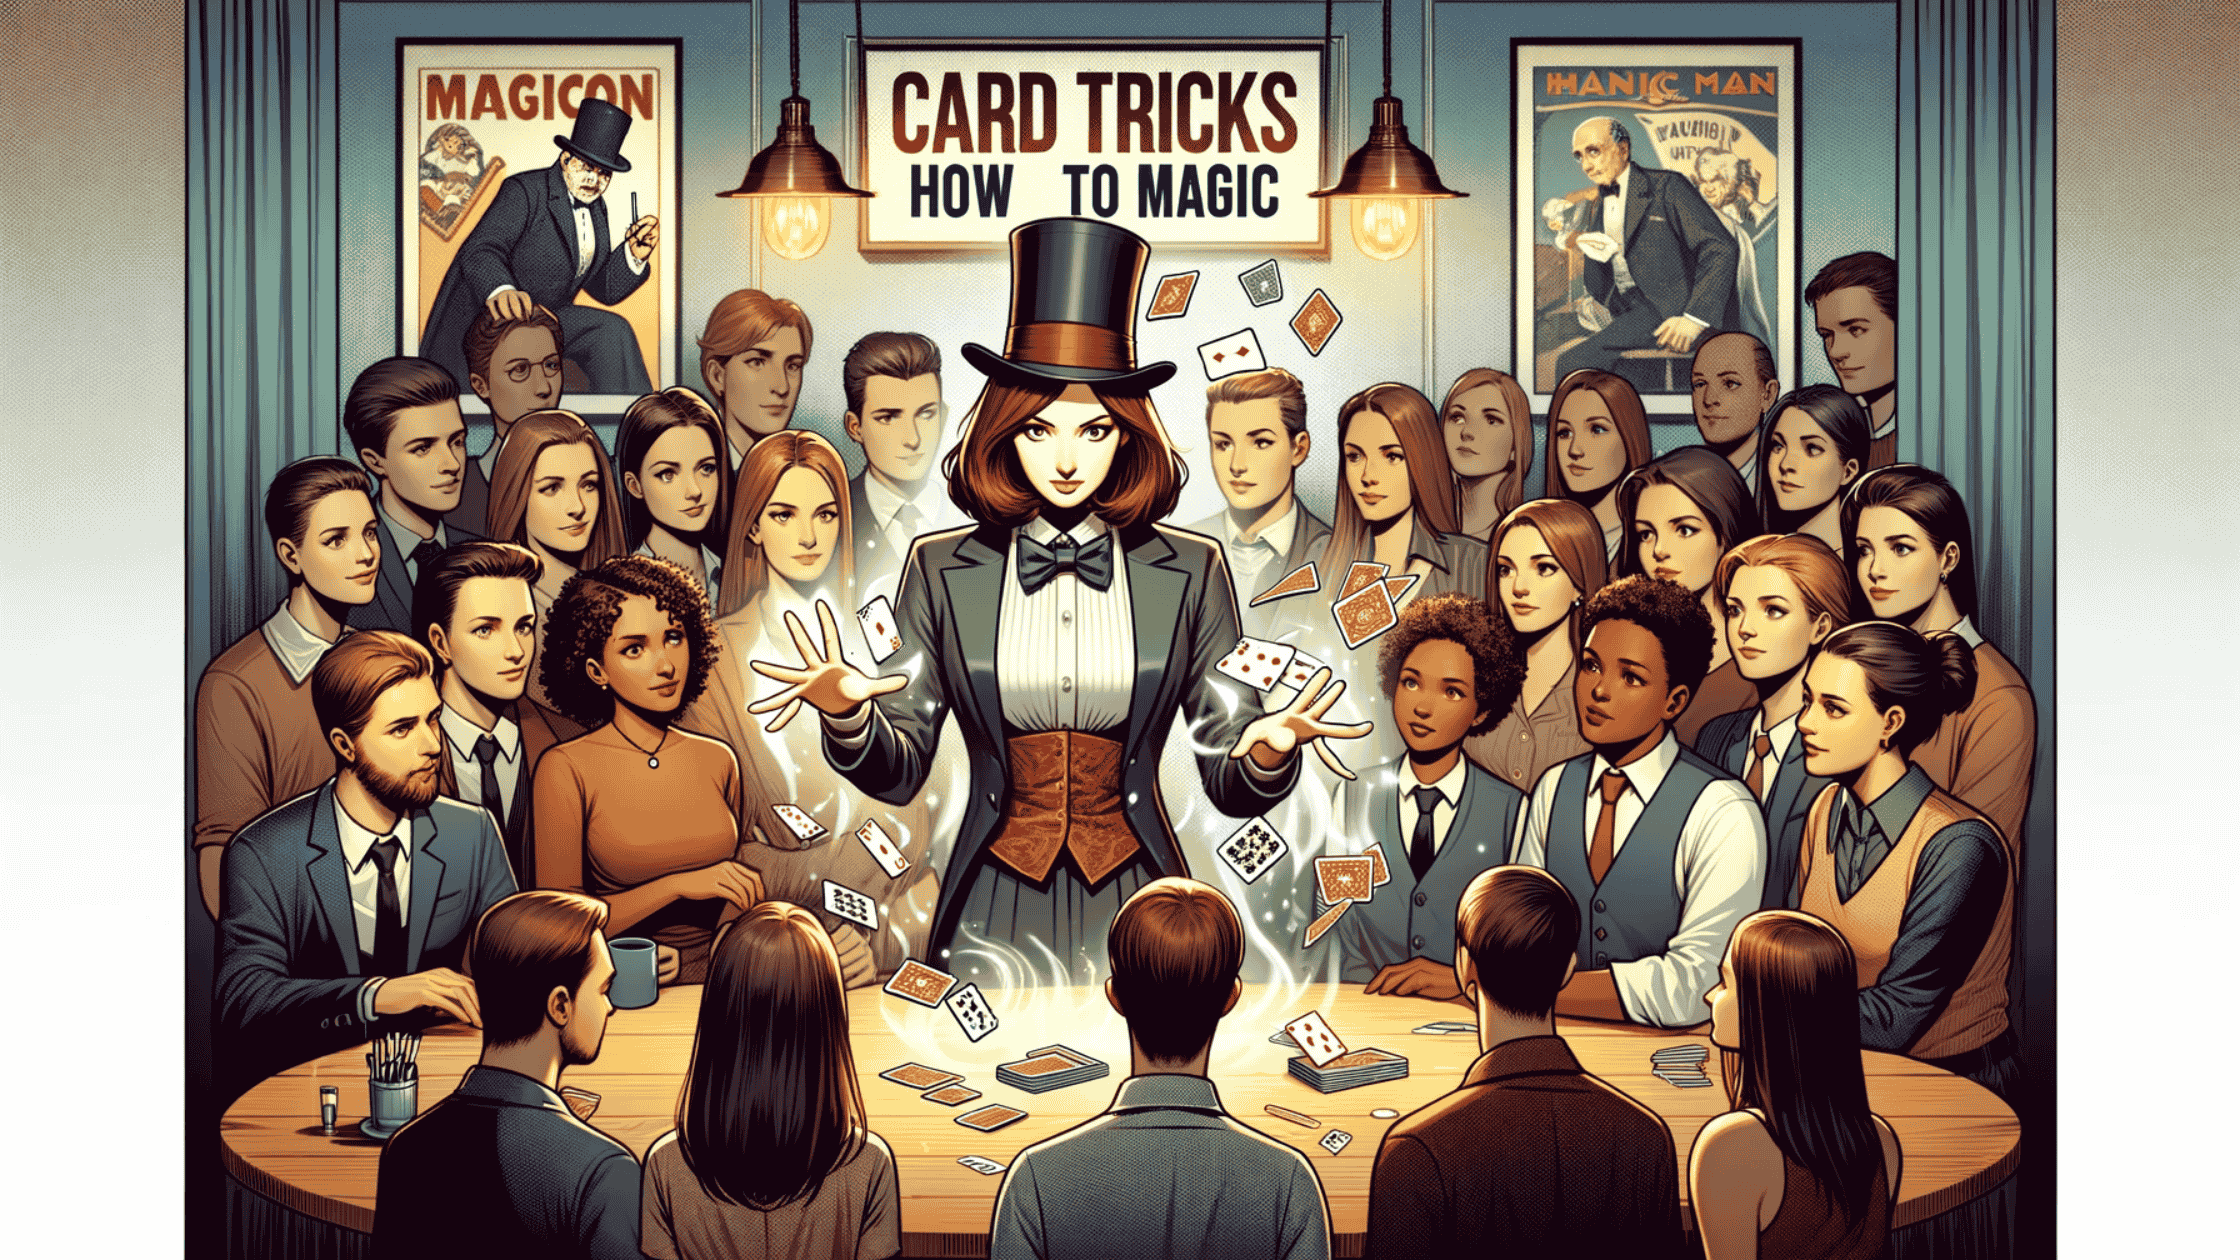 Card Tricks How to Magic